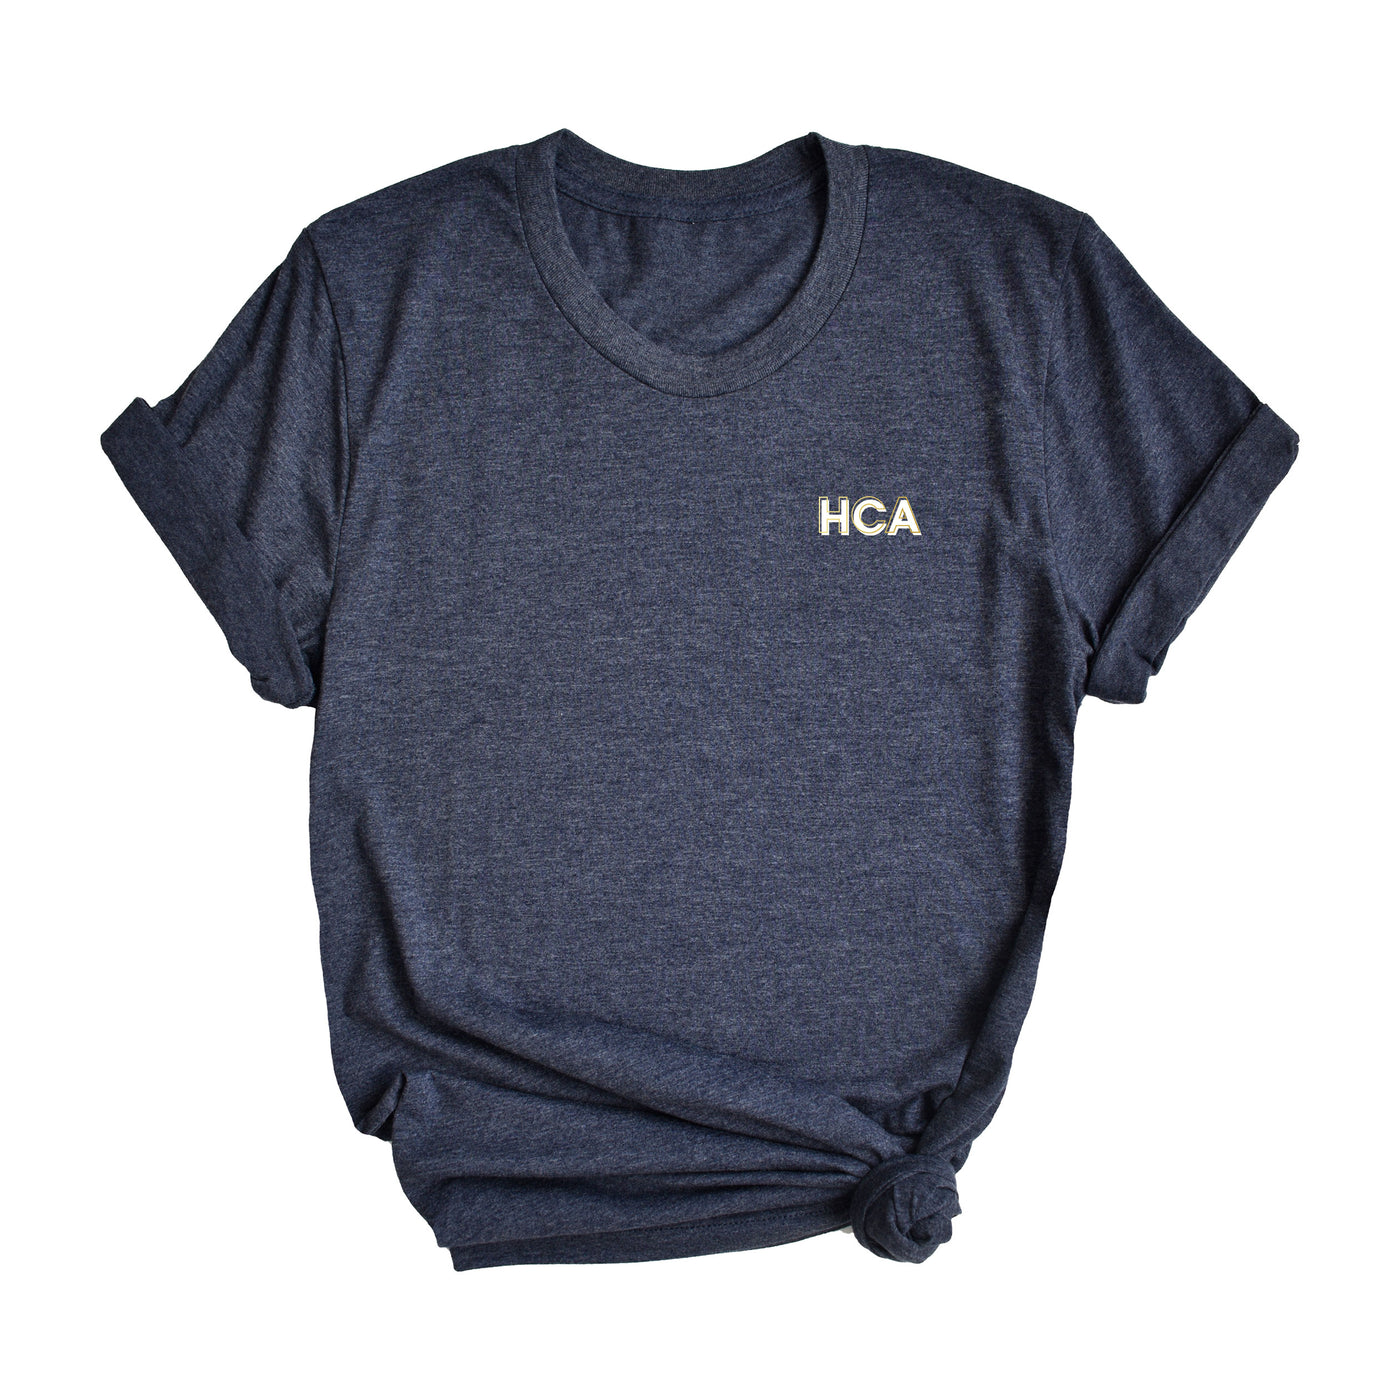 HCA Creds - Shirt